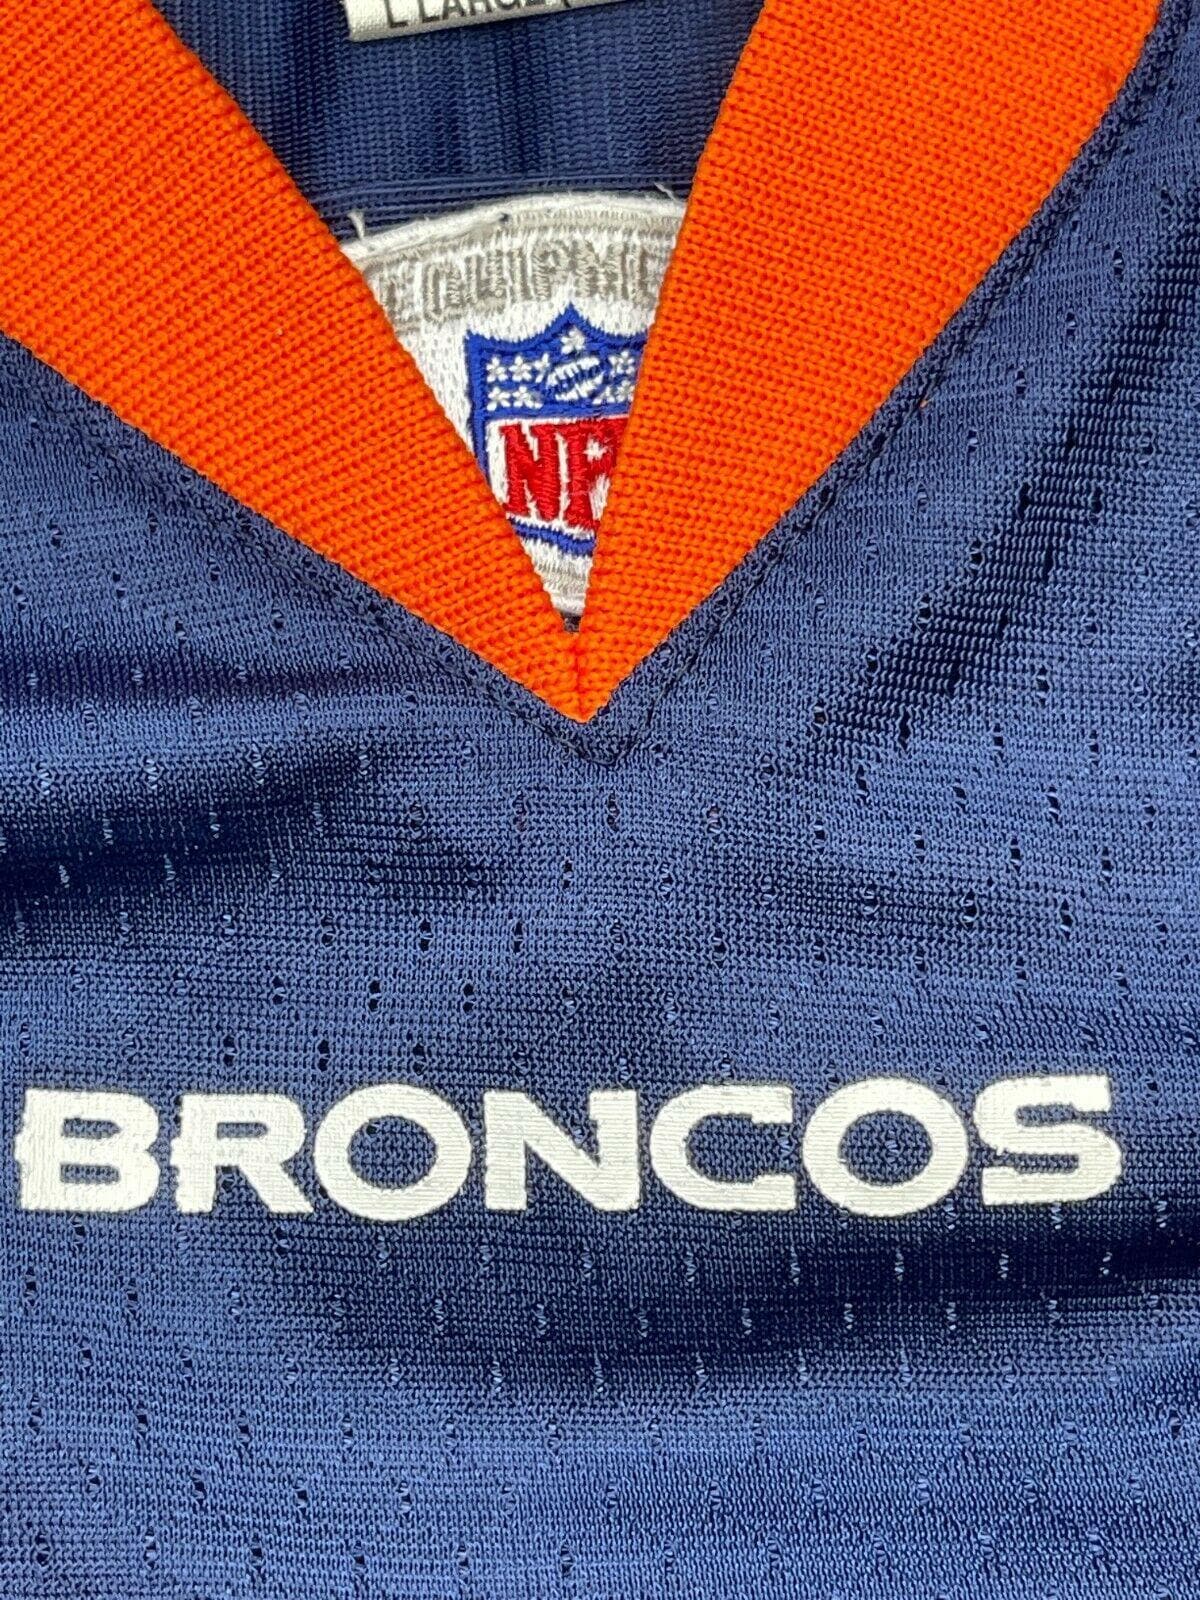 NFL Denver Broncos Bailey #24 Reebok Stitched Jersey Youth Large 14-16